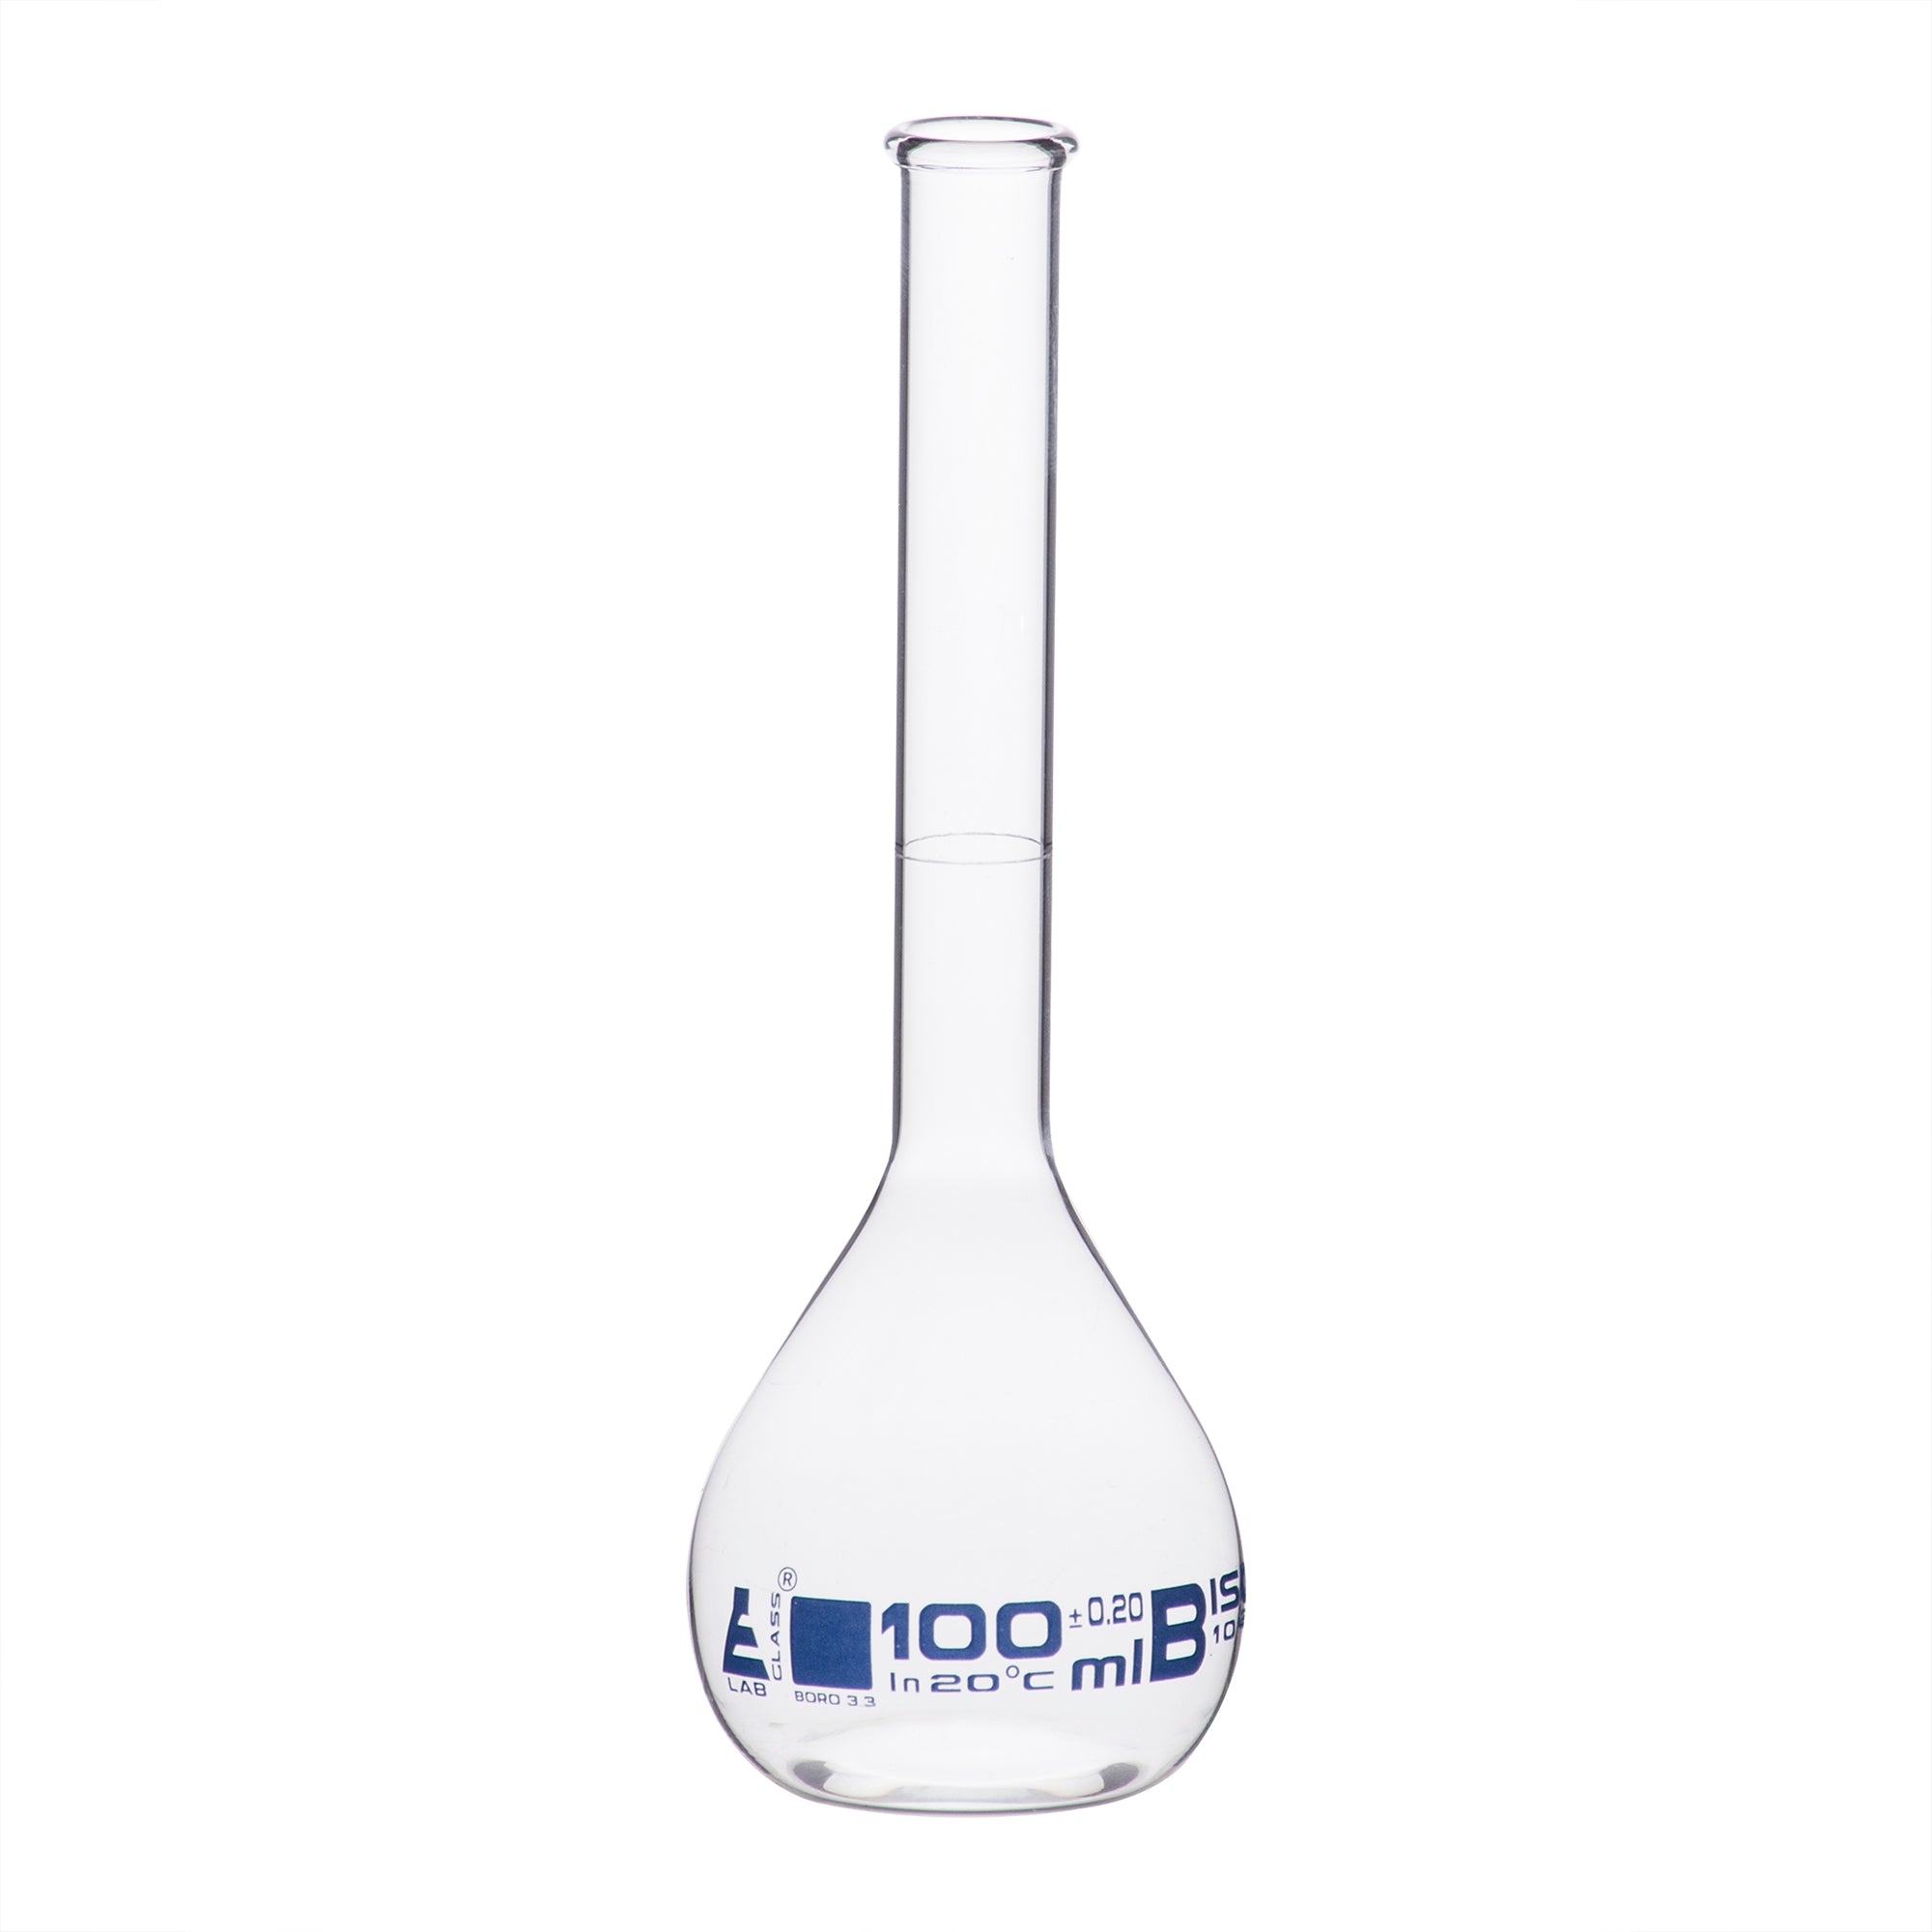 Borosilicate Glass Volumetric Flask with Beaded Rim, 100ml, Class B, Blue Print, Autoclavable